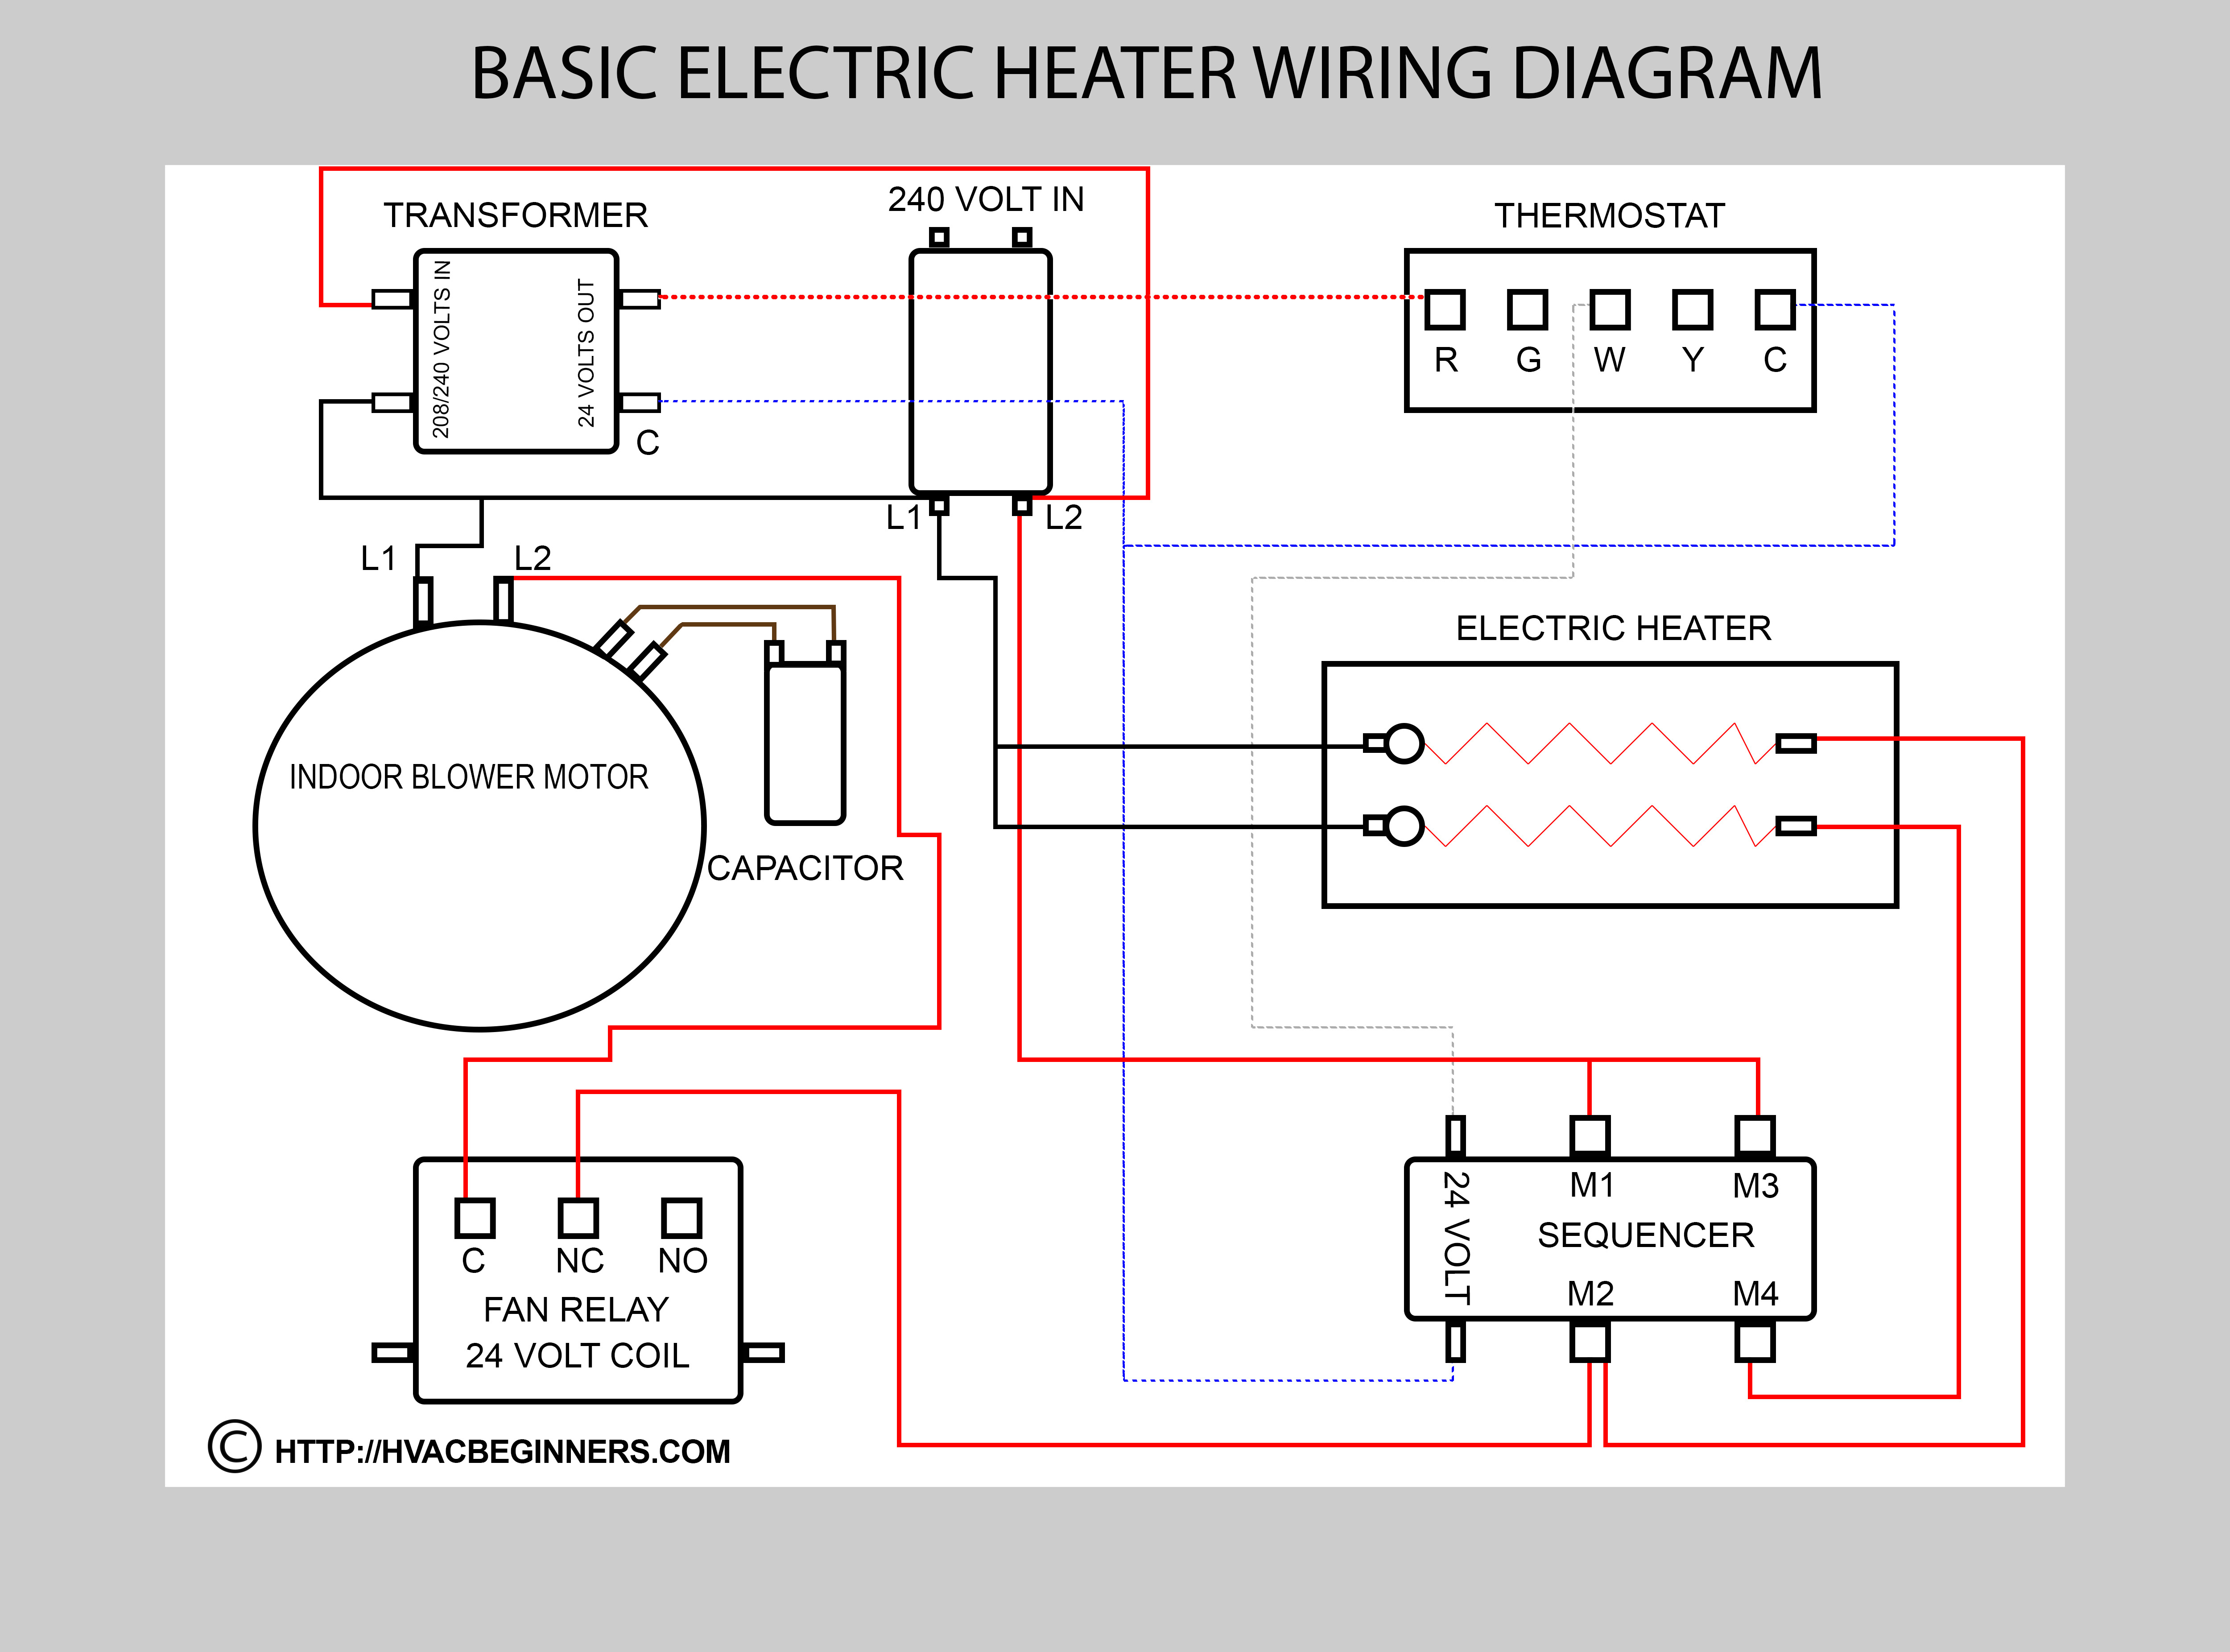 Ac Air Handler Fan Relay Wiring Diagram | Wiring Diagram - Air Handler Fan Relay Wiring Diagram